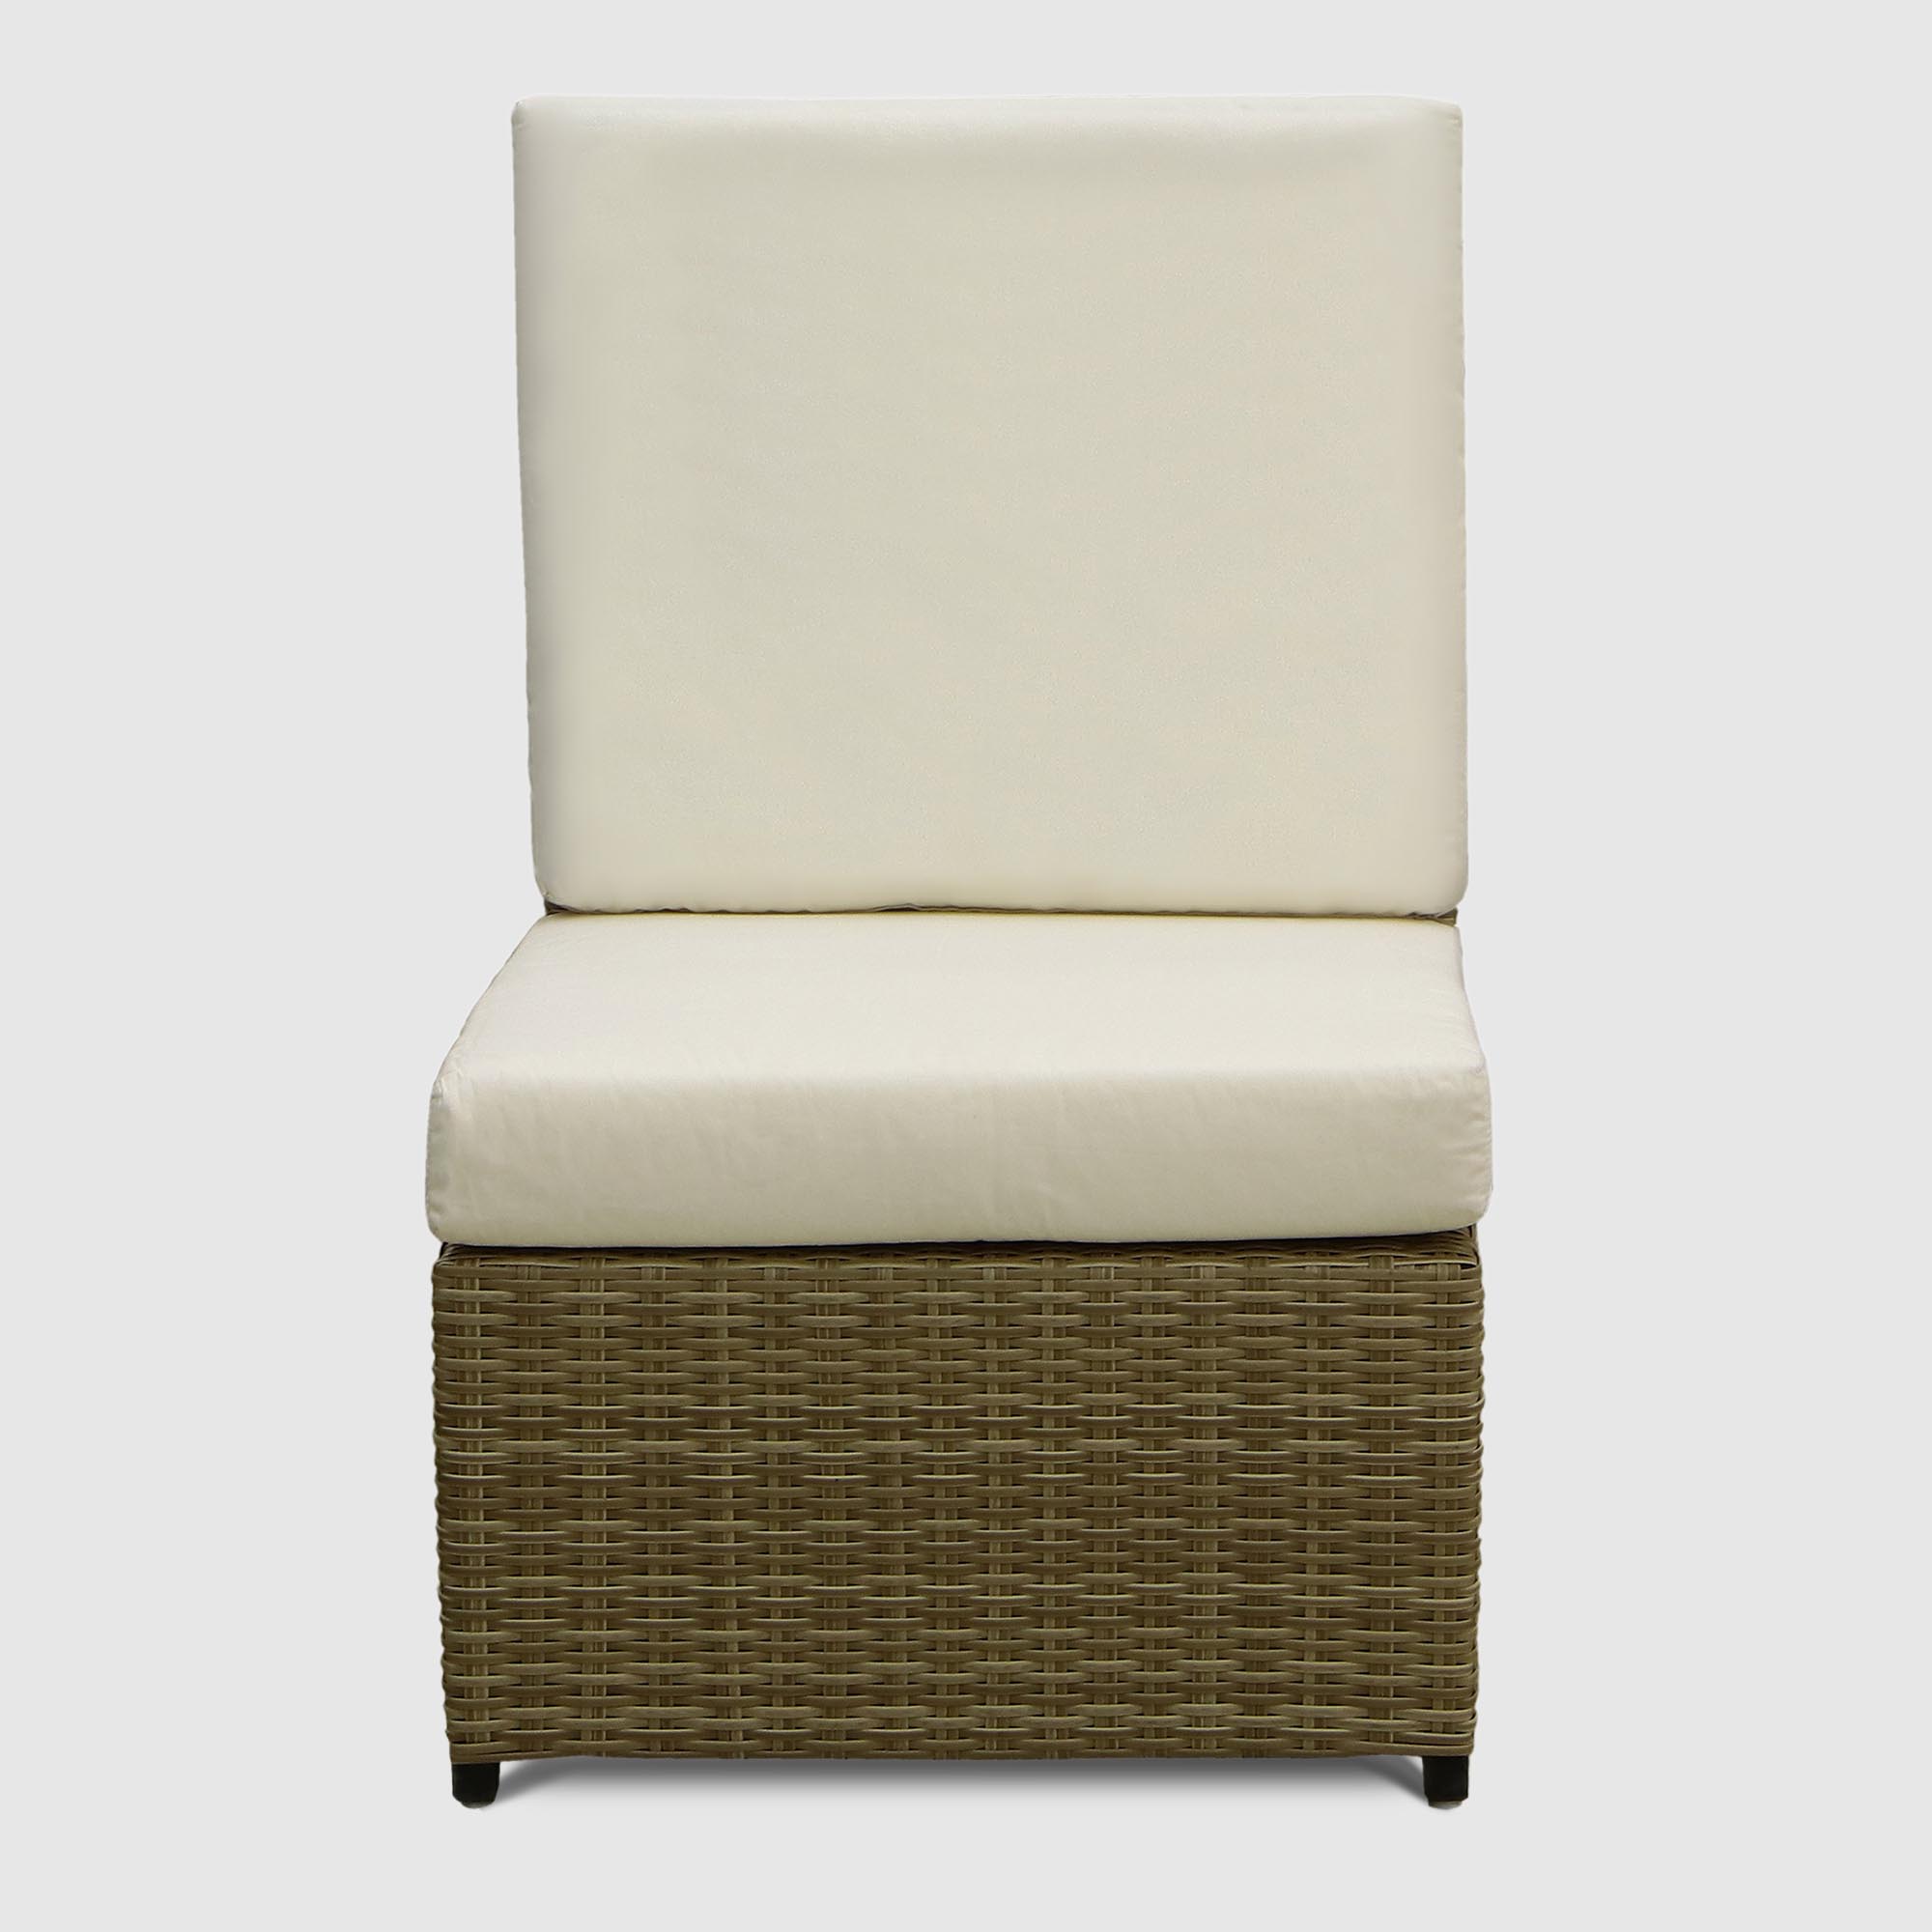 Комплект мебели Rattan grand 2 предмета, цвет коричневый, размер 220х85х82 - фото 3